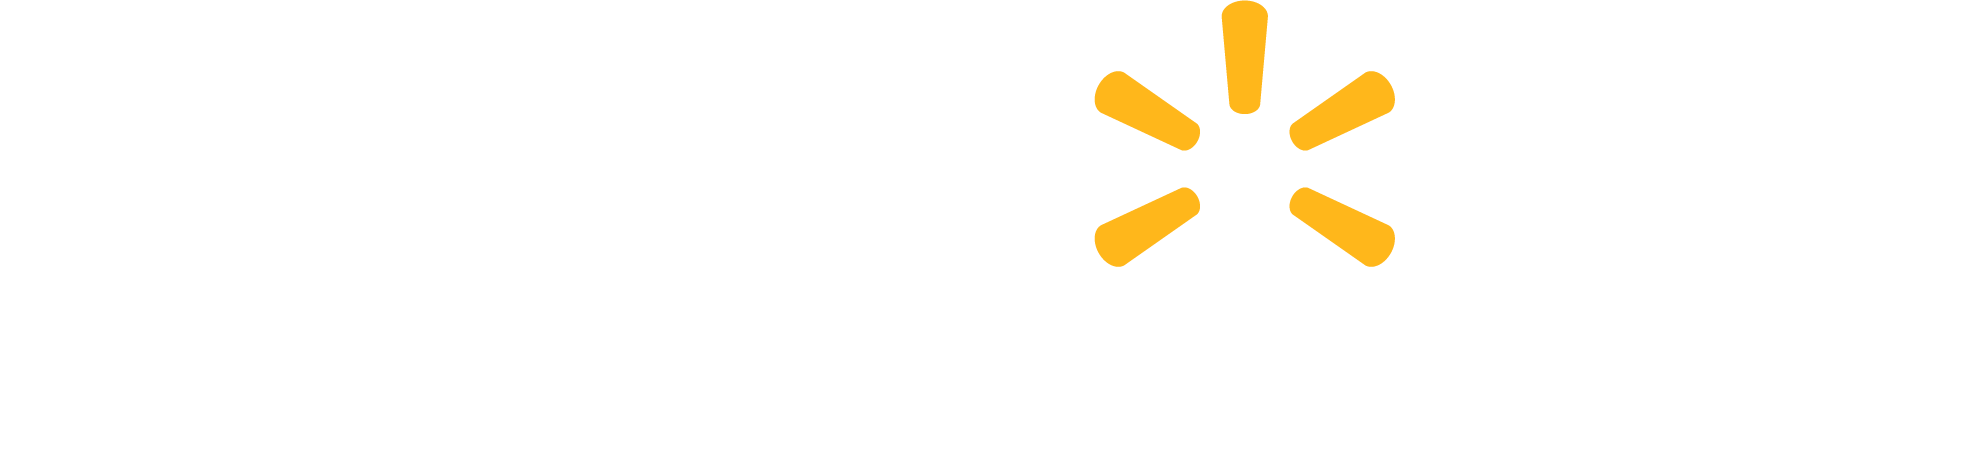 Walmart Dot Com Logo - Walmart 7/18 campaign